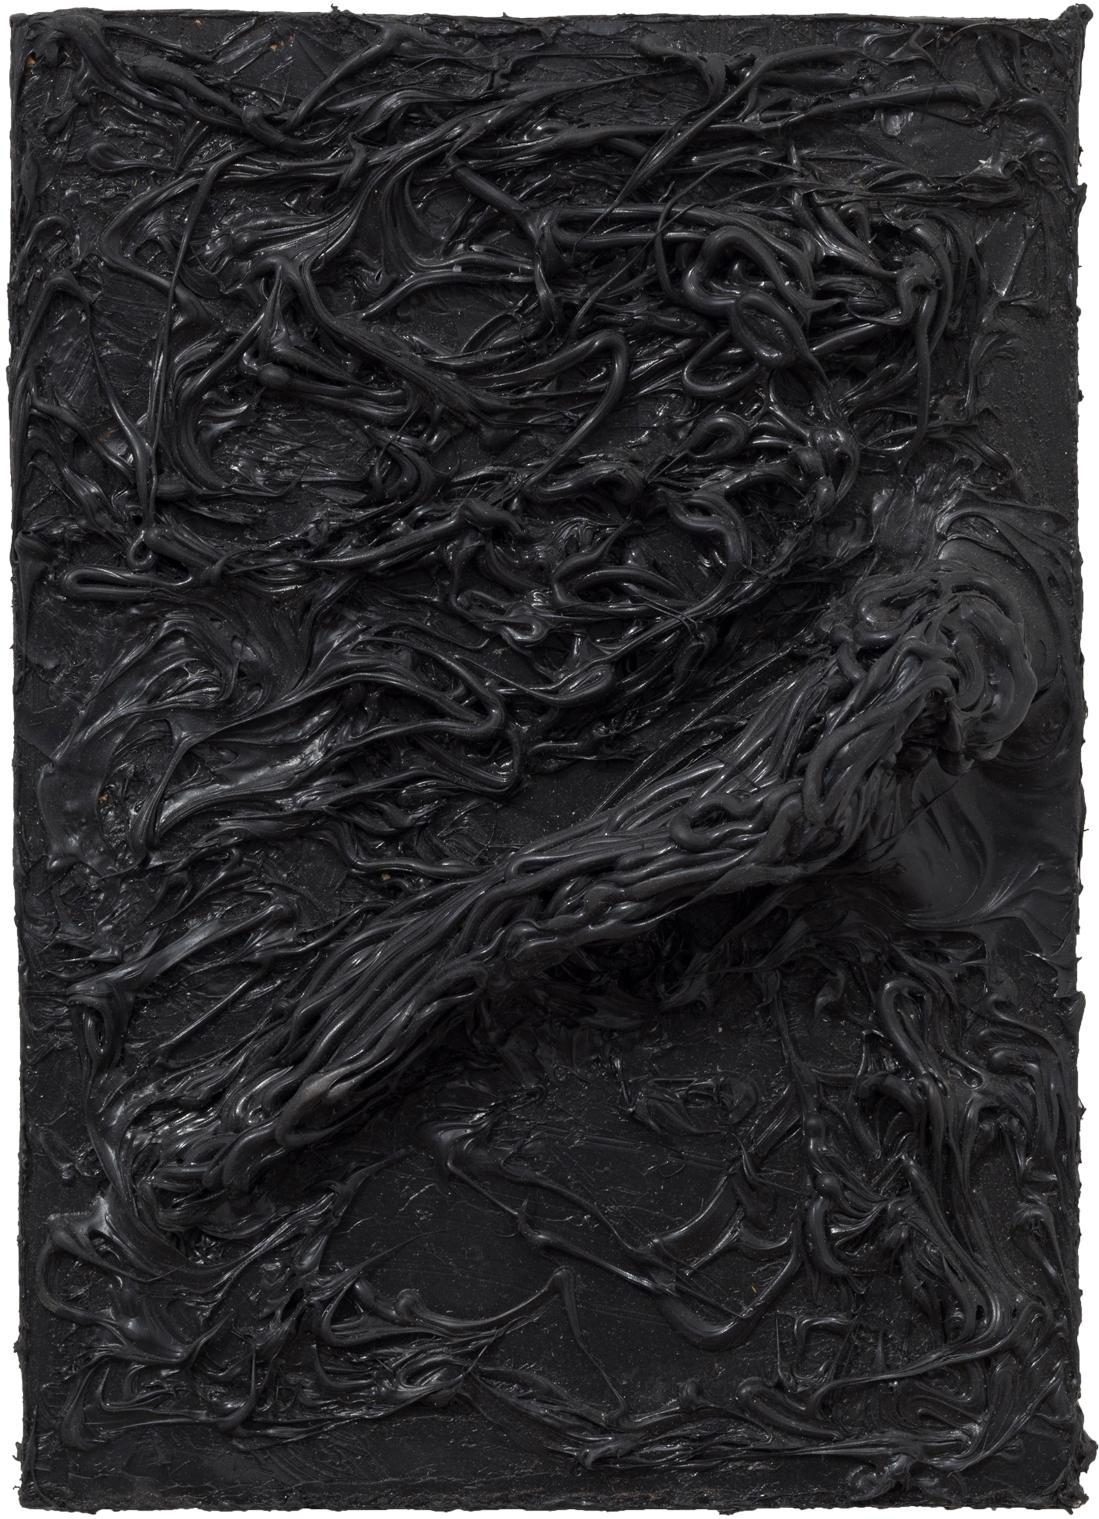 Untitled 04 - Contemporary, Black, Organic, Abstract, Monochrome, 21st Century - Mixed Media Art by Zsolt Berszán